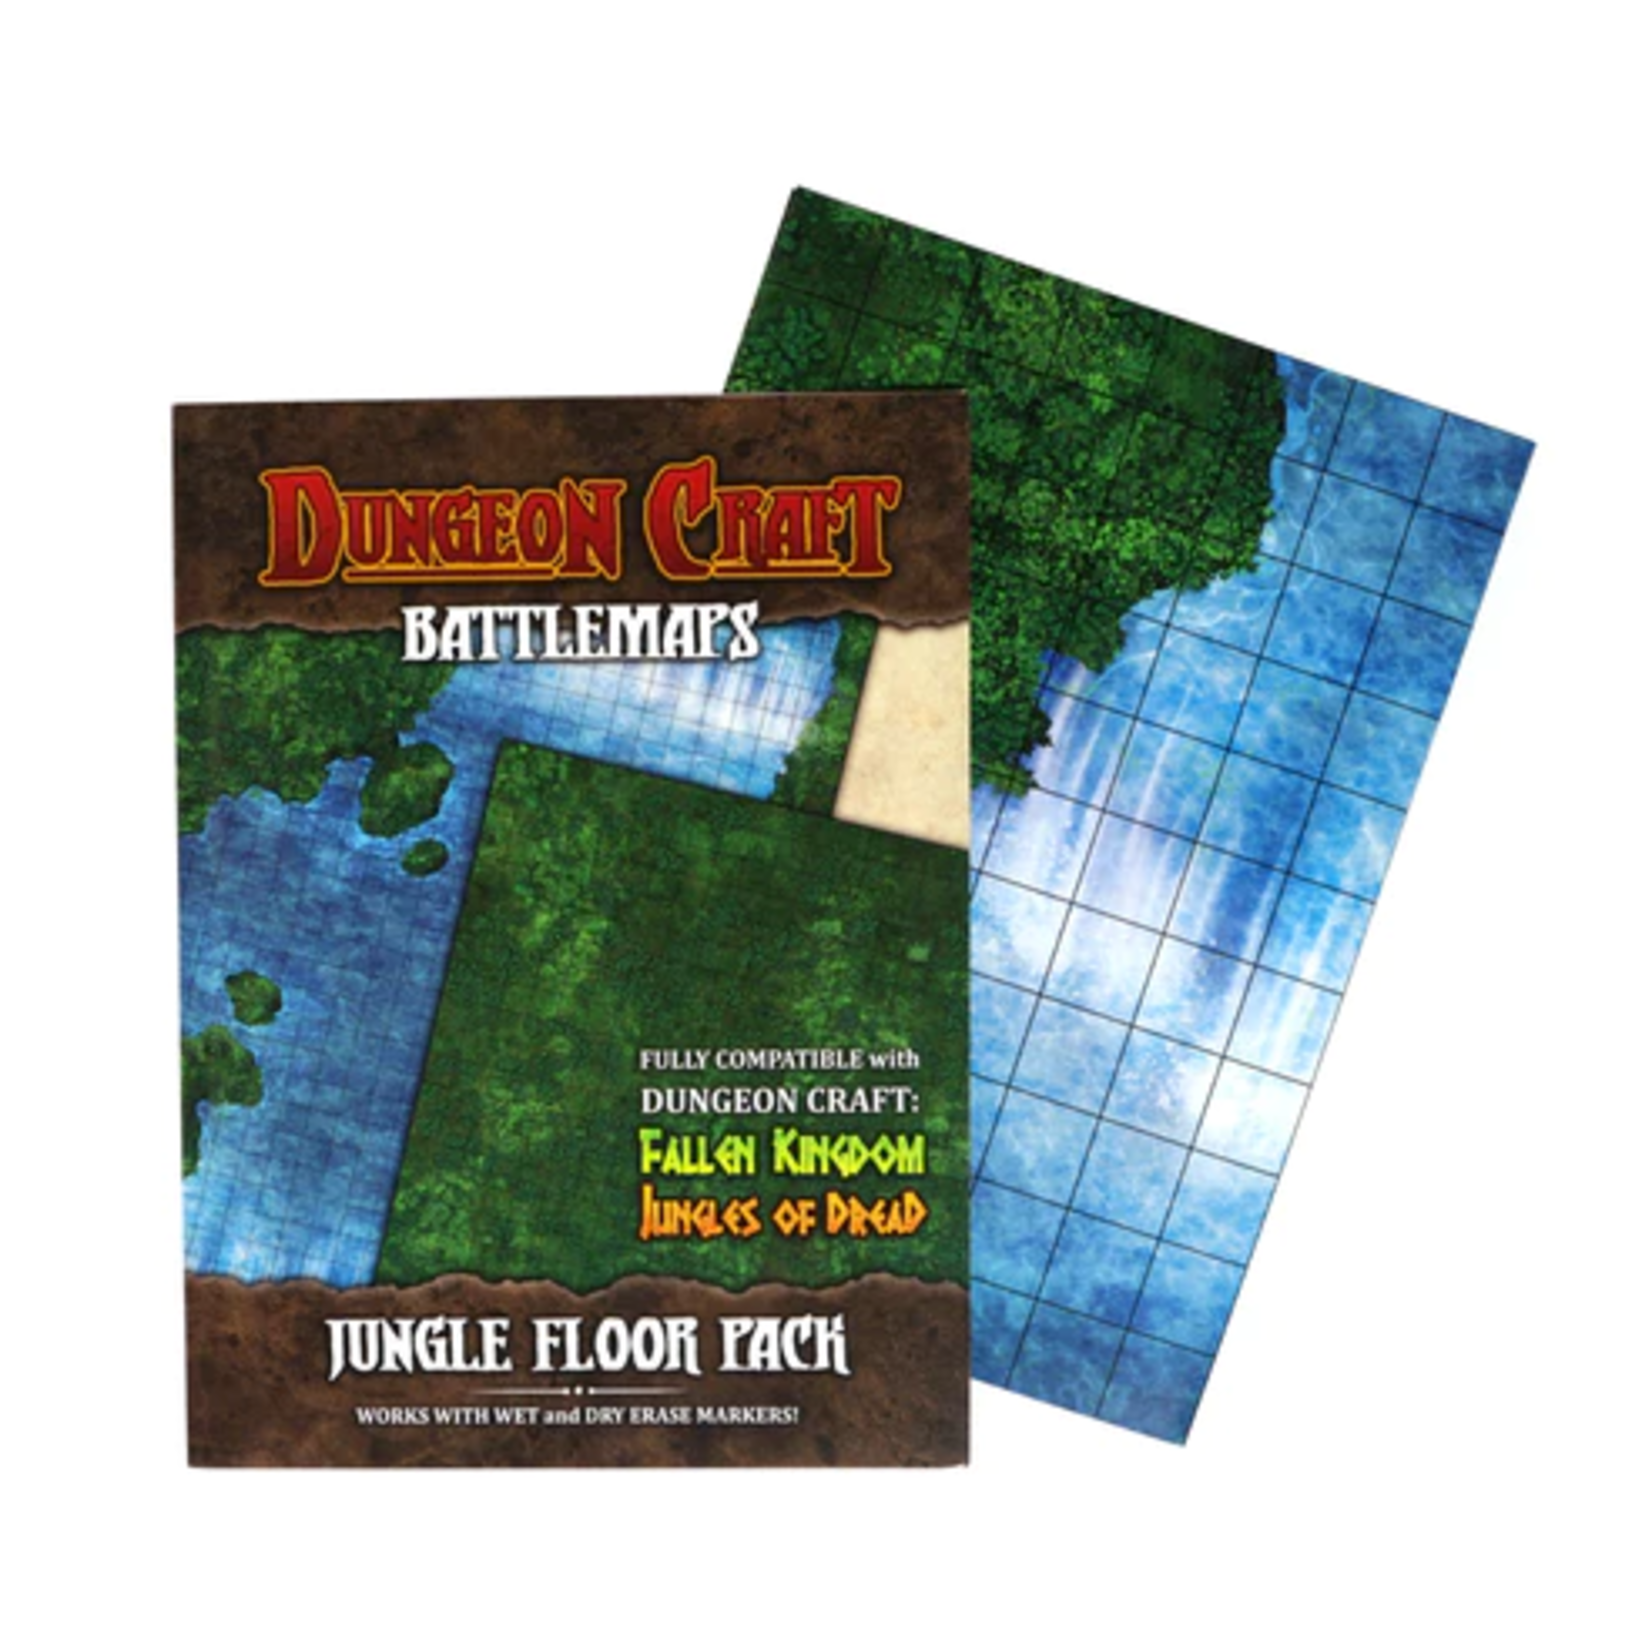 1985 Games Dungeon Craft Battle Maps Jungle Floor Pack